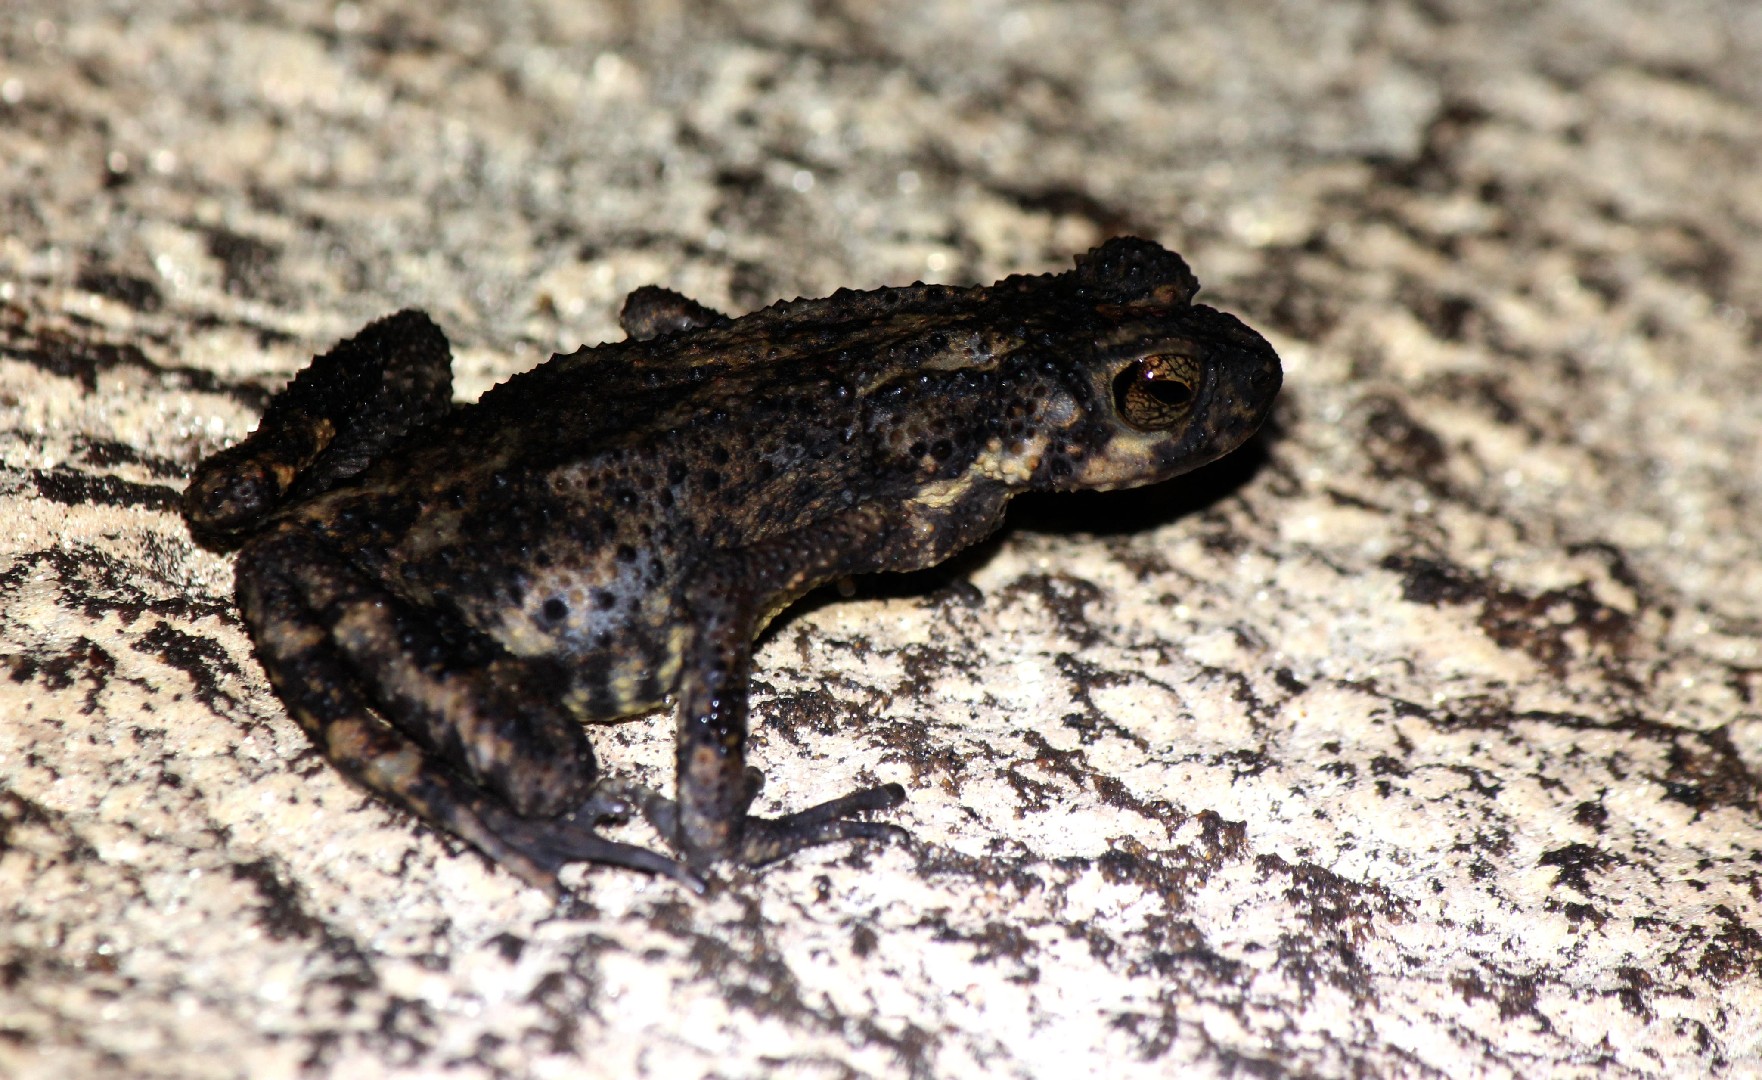 Sri lankan dwarf frogs (Adenomus)